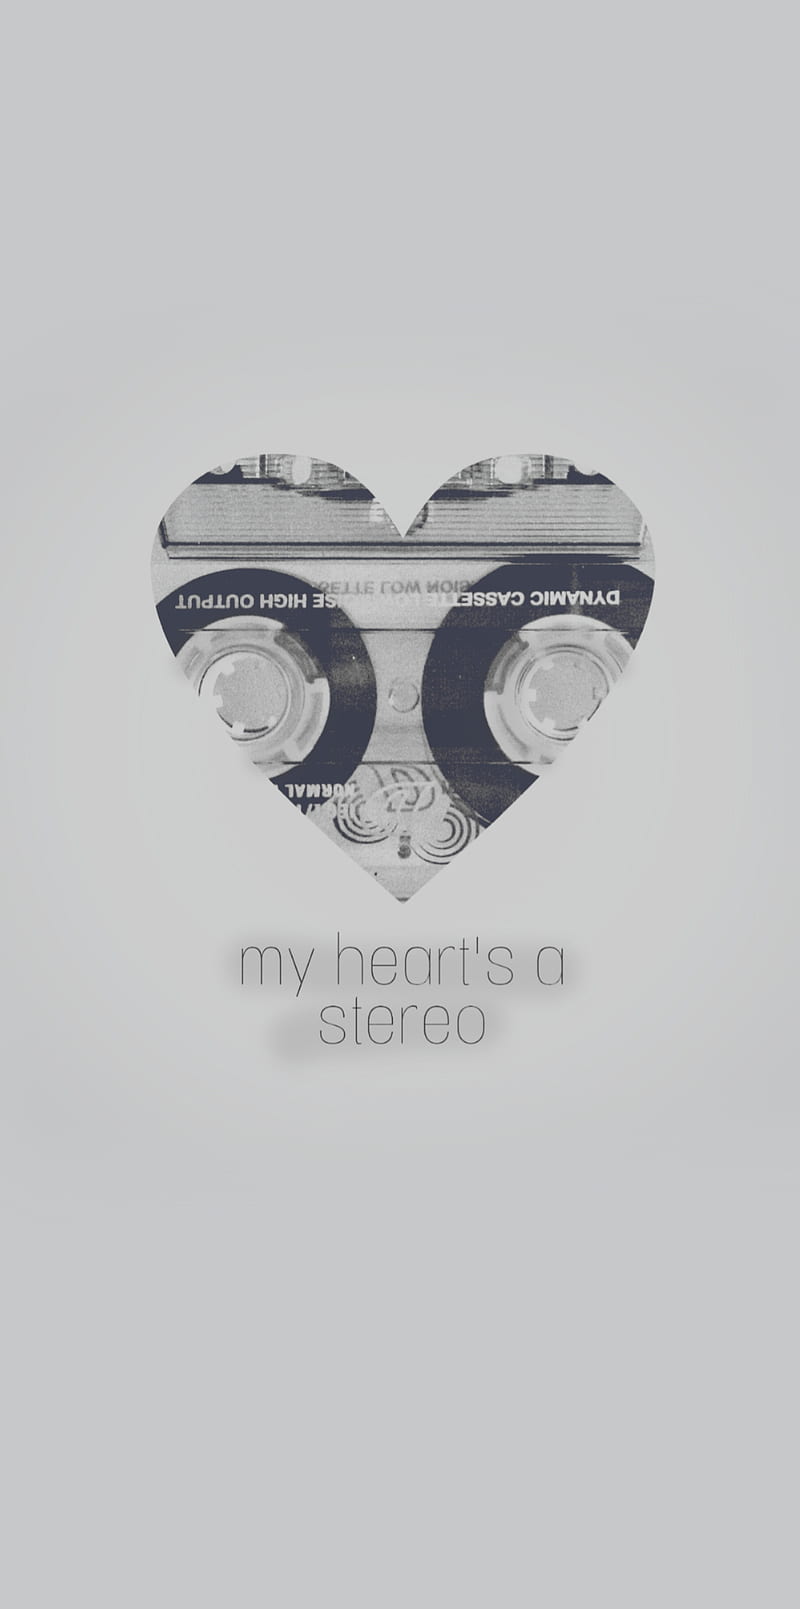 my hearts a stereo